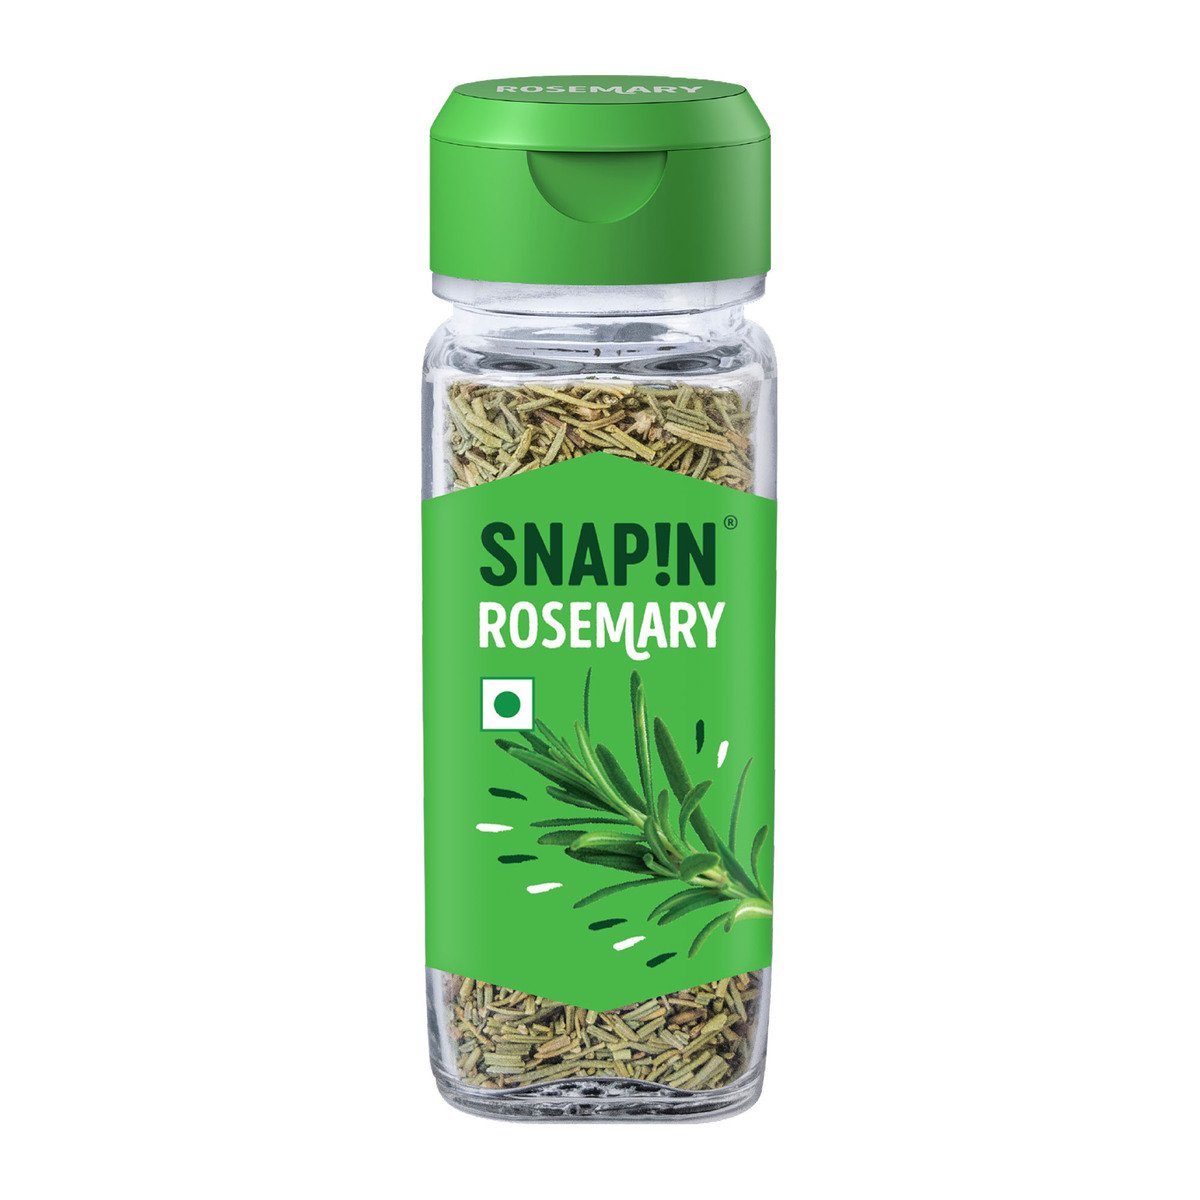 Snapin Rosemary 25 g